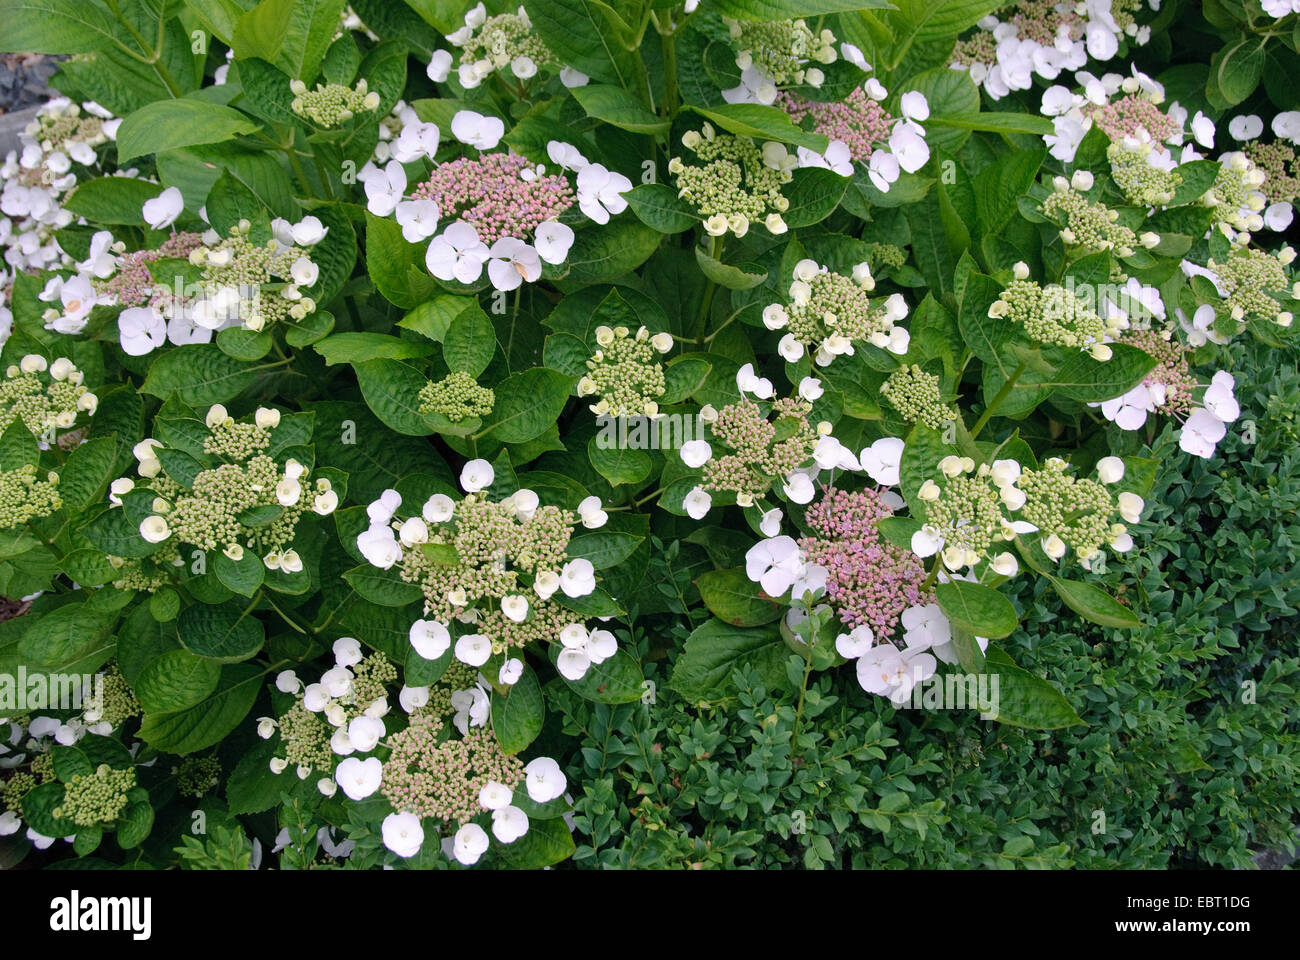 Garden hydrangea, Lace cap hydrangea (Hydrangea macrophylla 'Libelle', Hydrangea macrophylla Libelle), cultivar Libelle Stock Photo